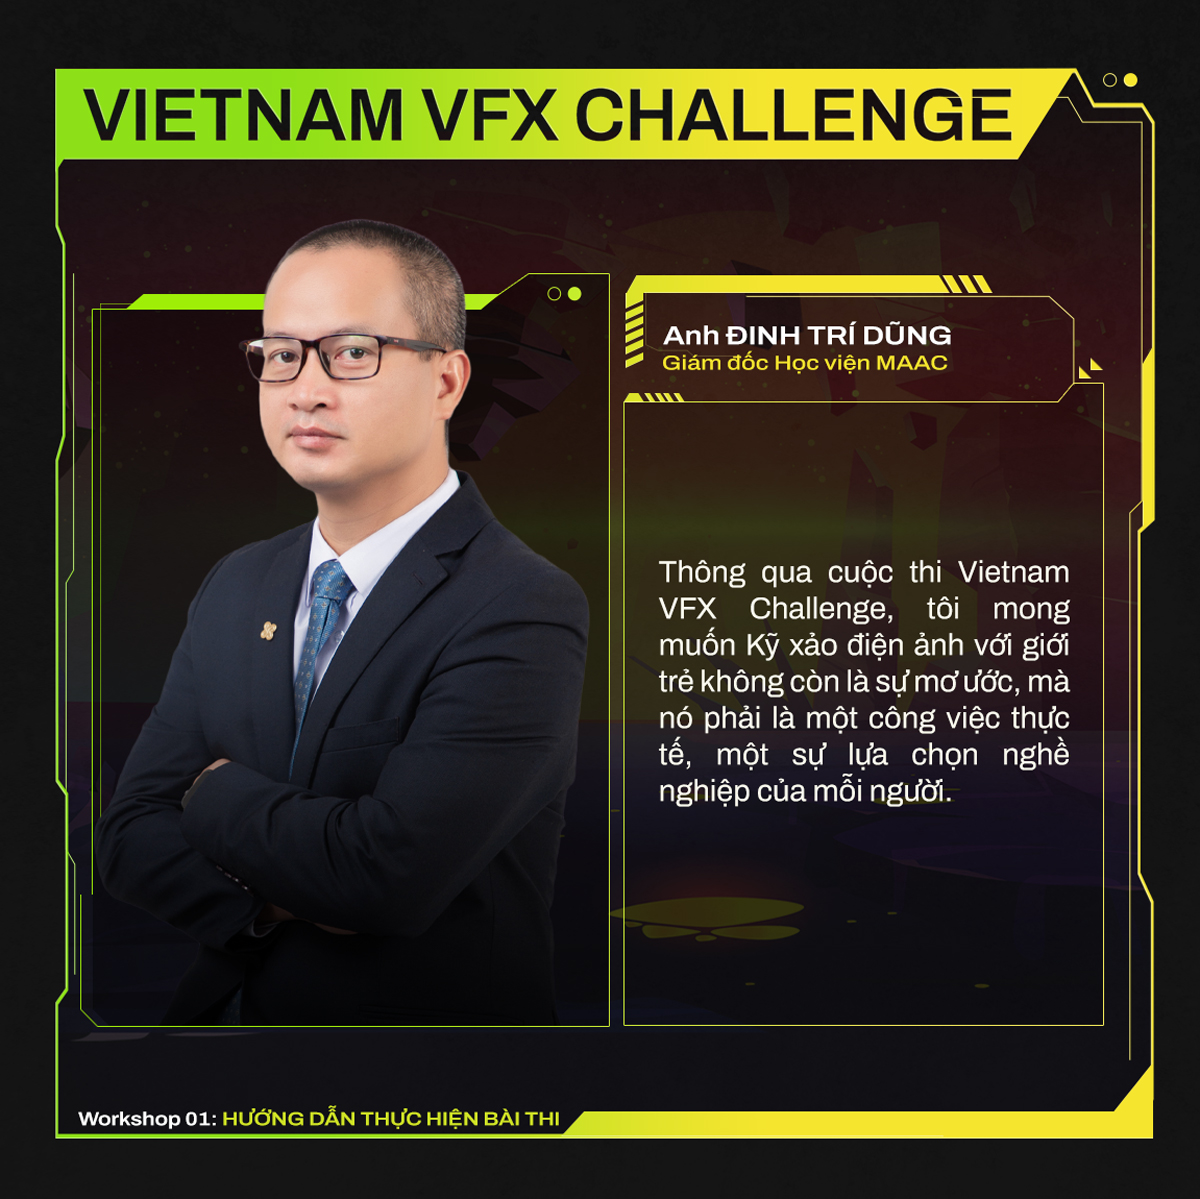 2-lang-nghe-ban-giam-khao-vietnam-vfx-challenge-he-lo-bi-quyet-chinh-phuc-cuoc-thi